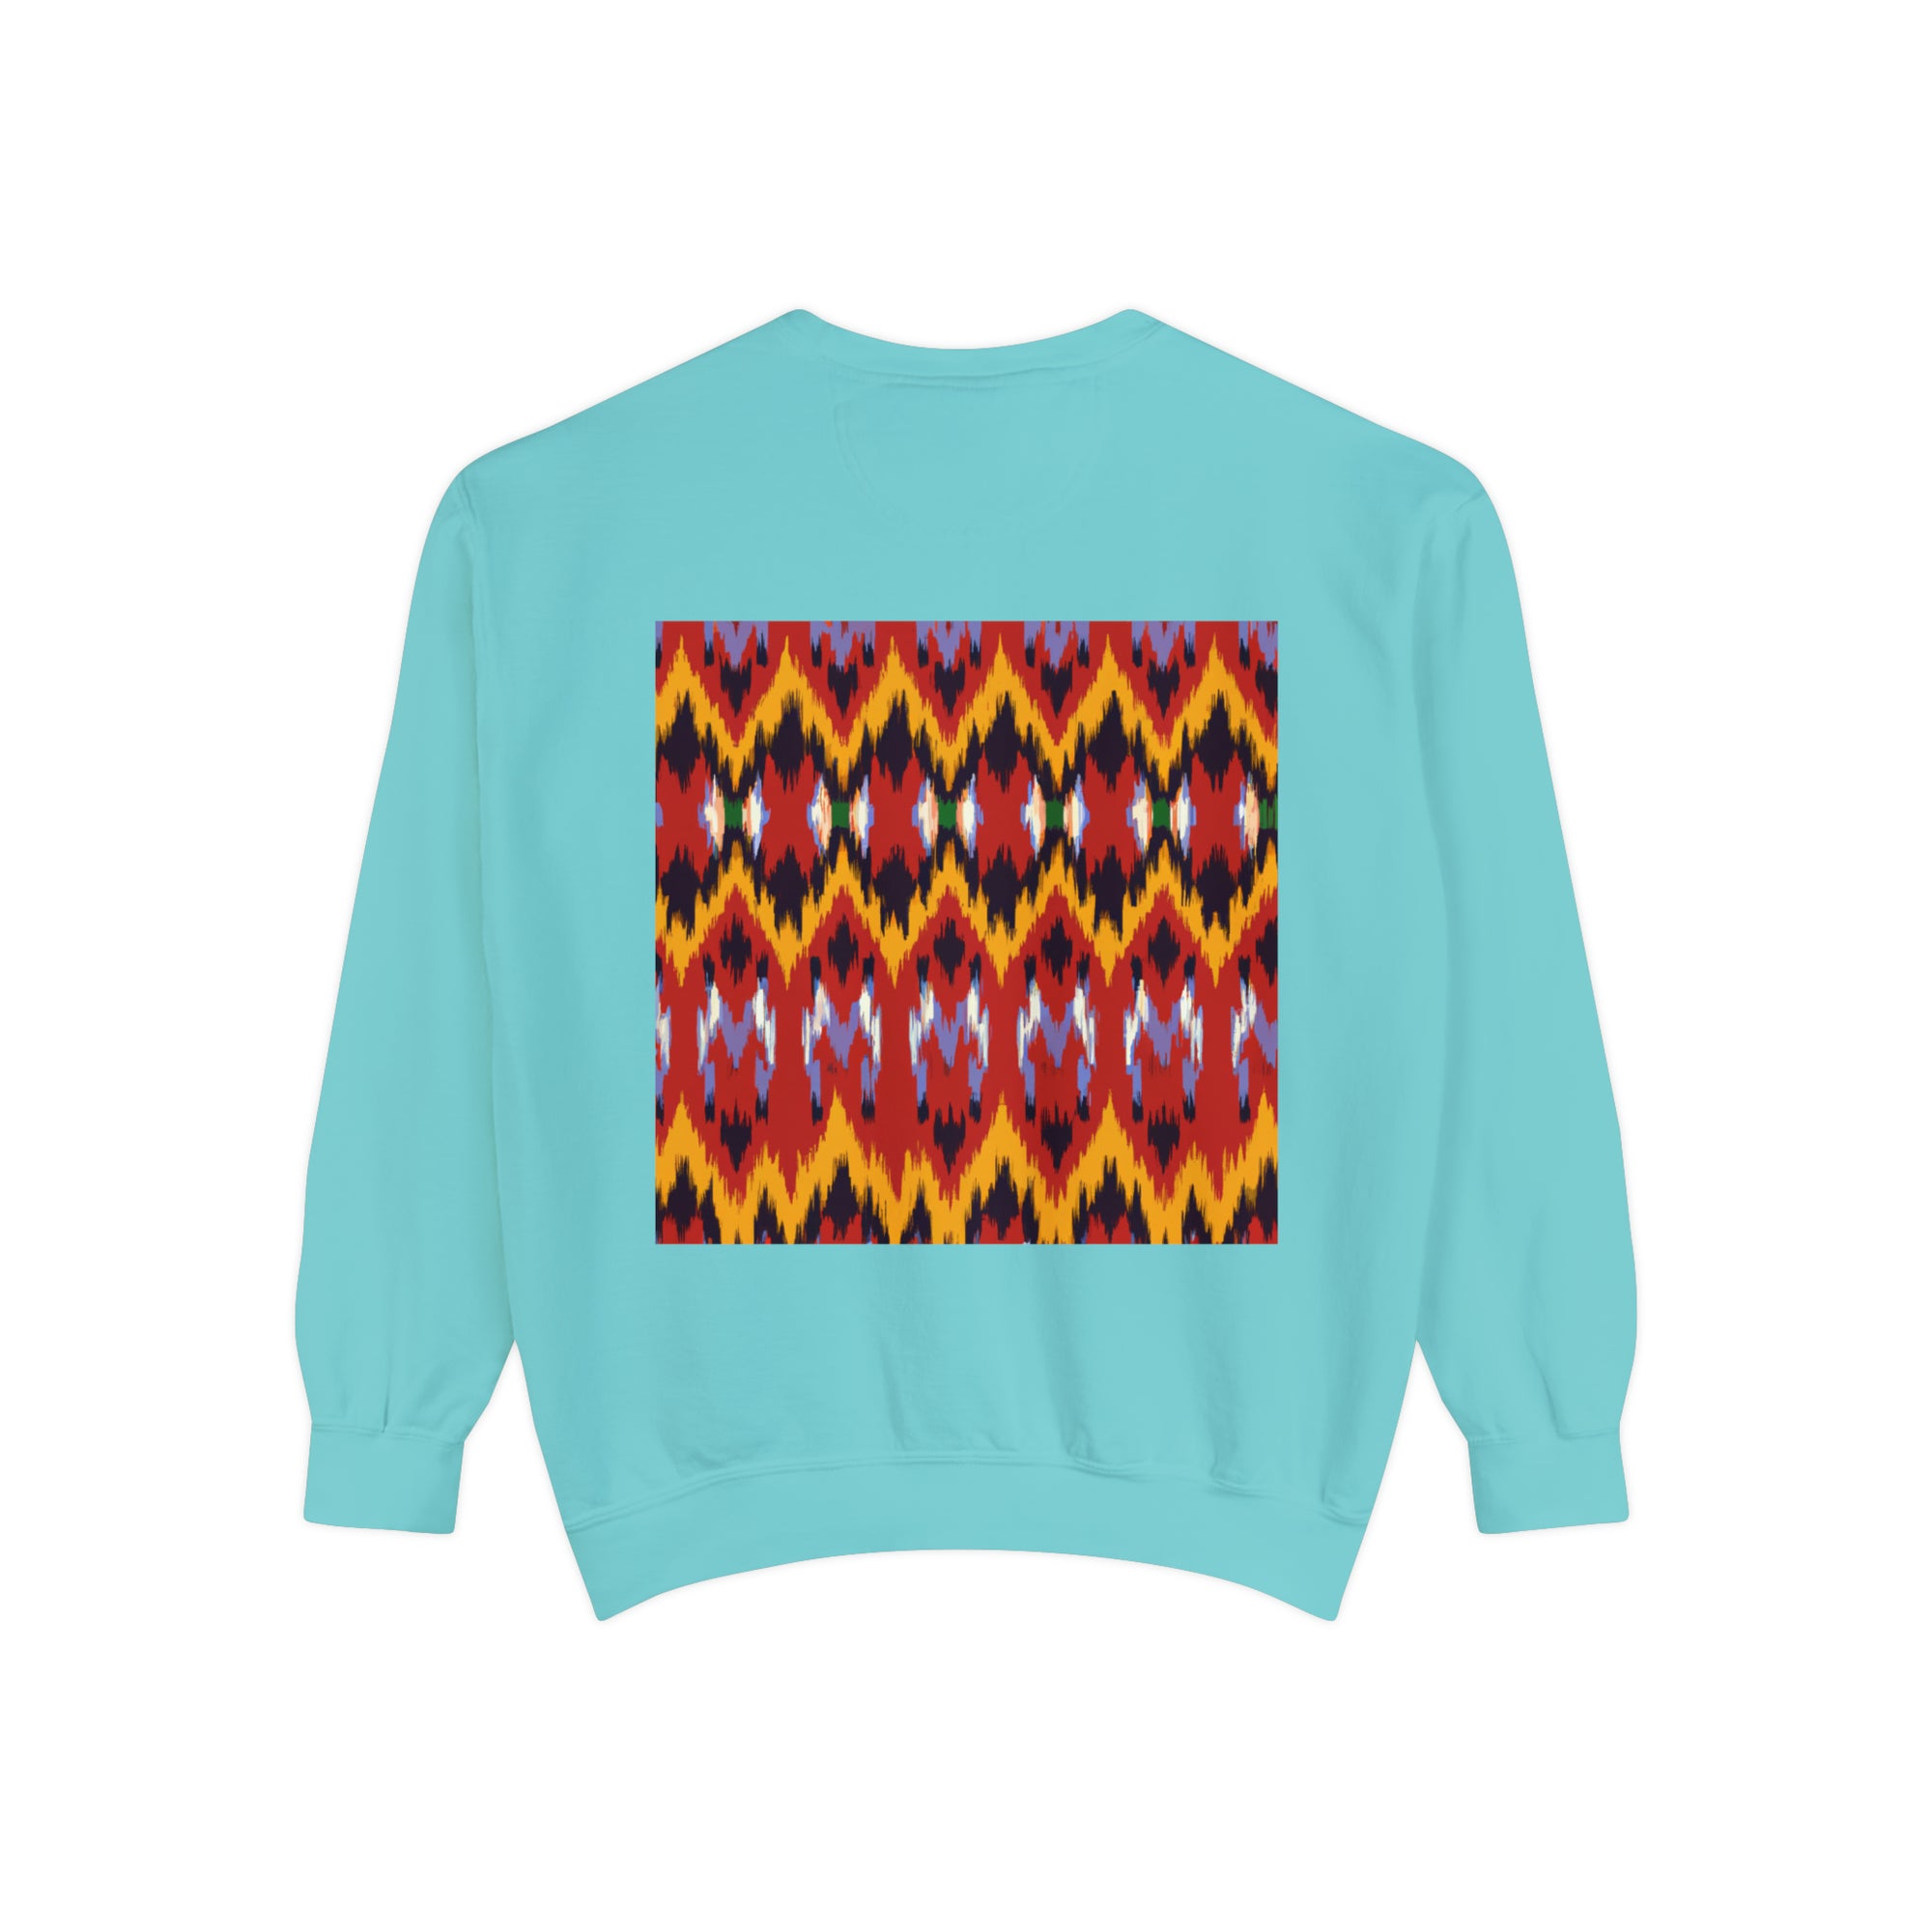 Thrive On! - Sweatshirt Garment-Dyed